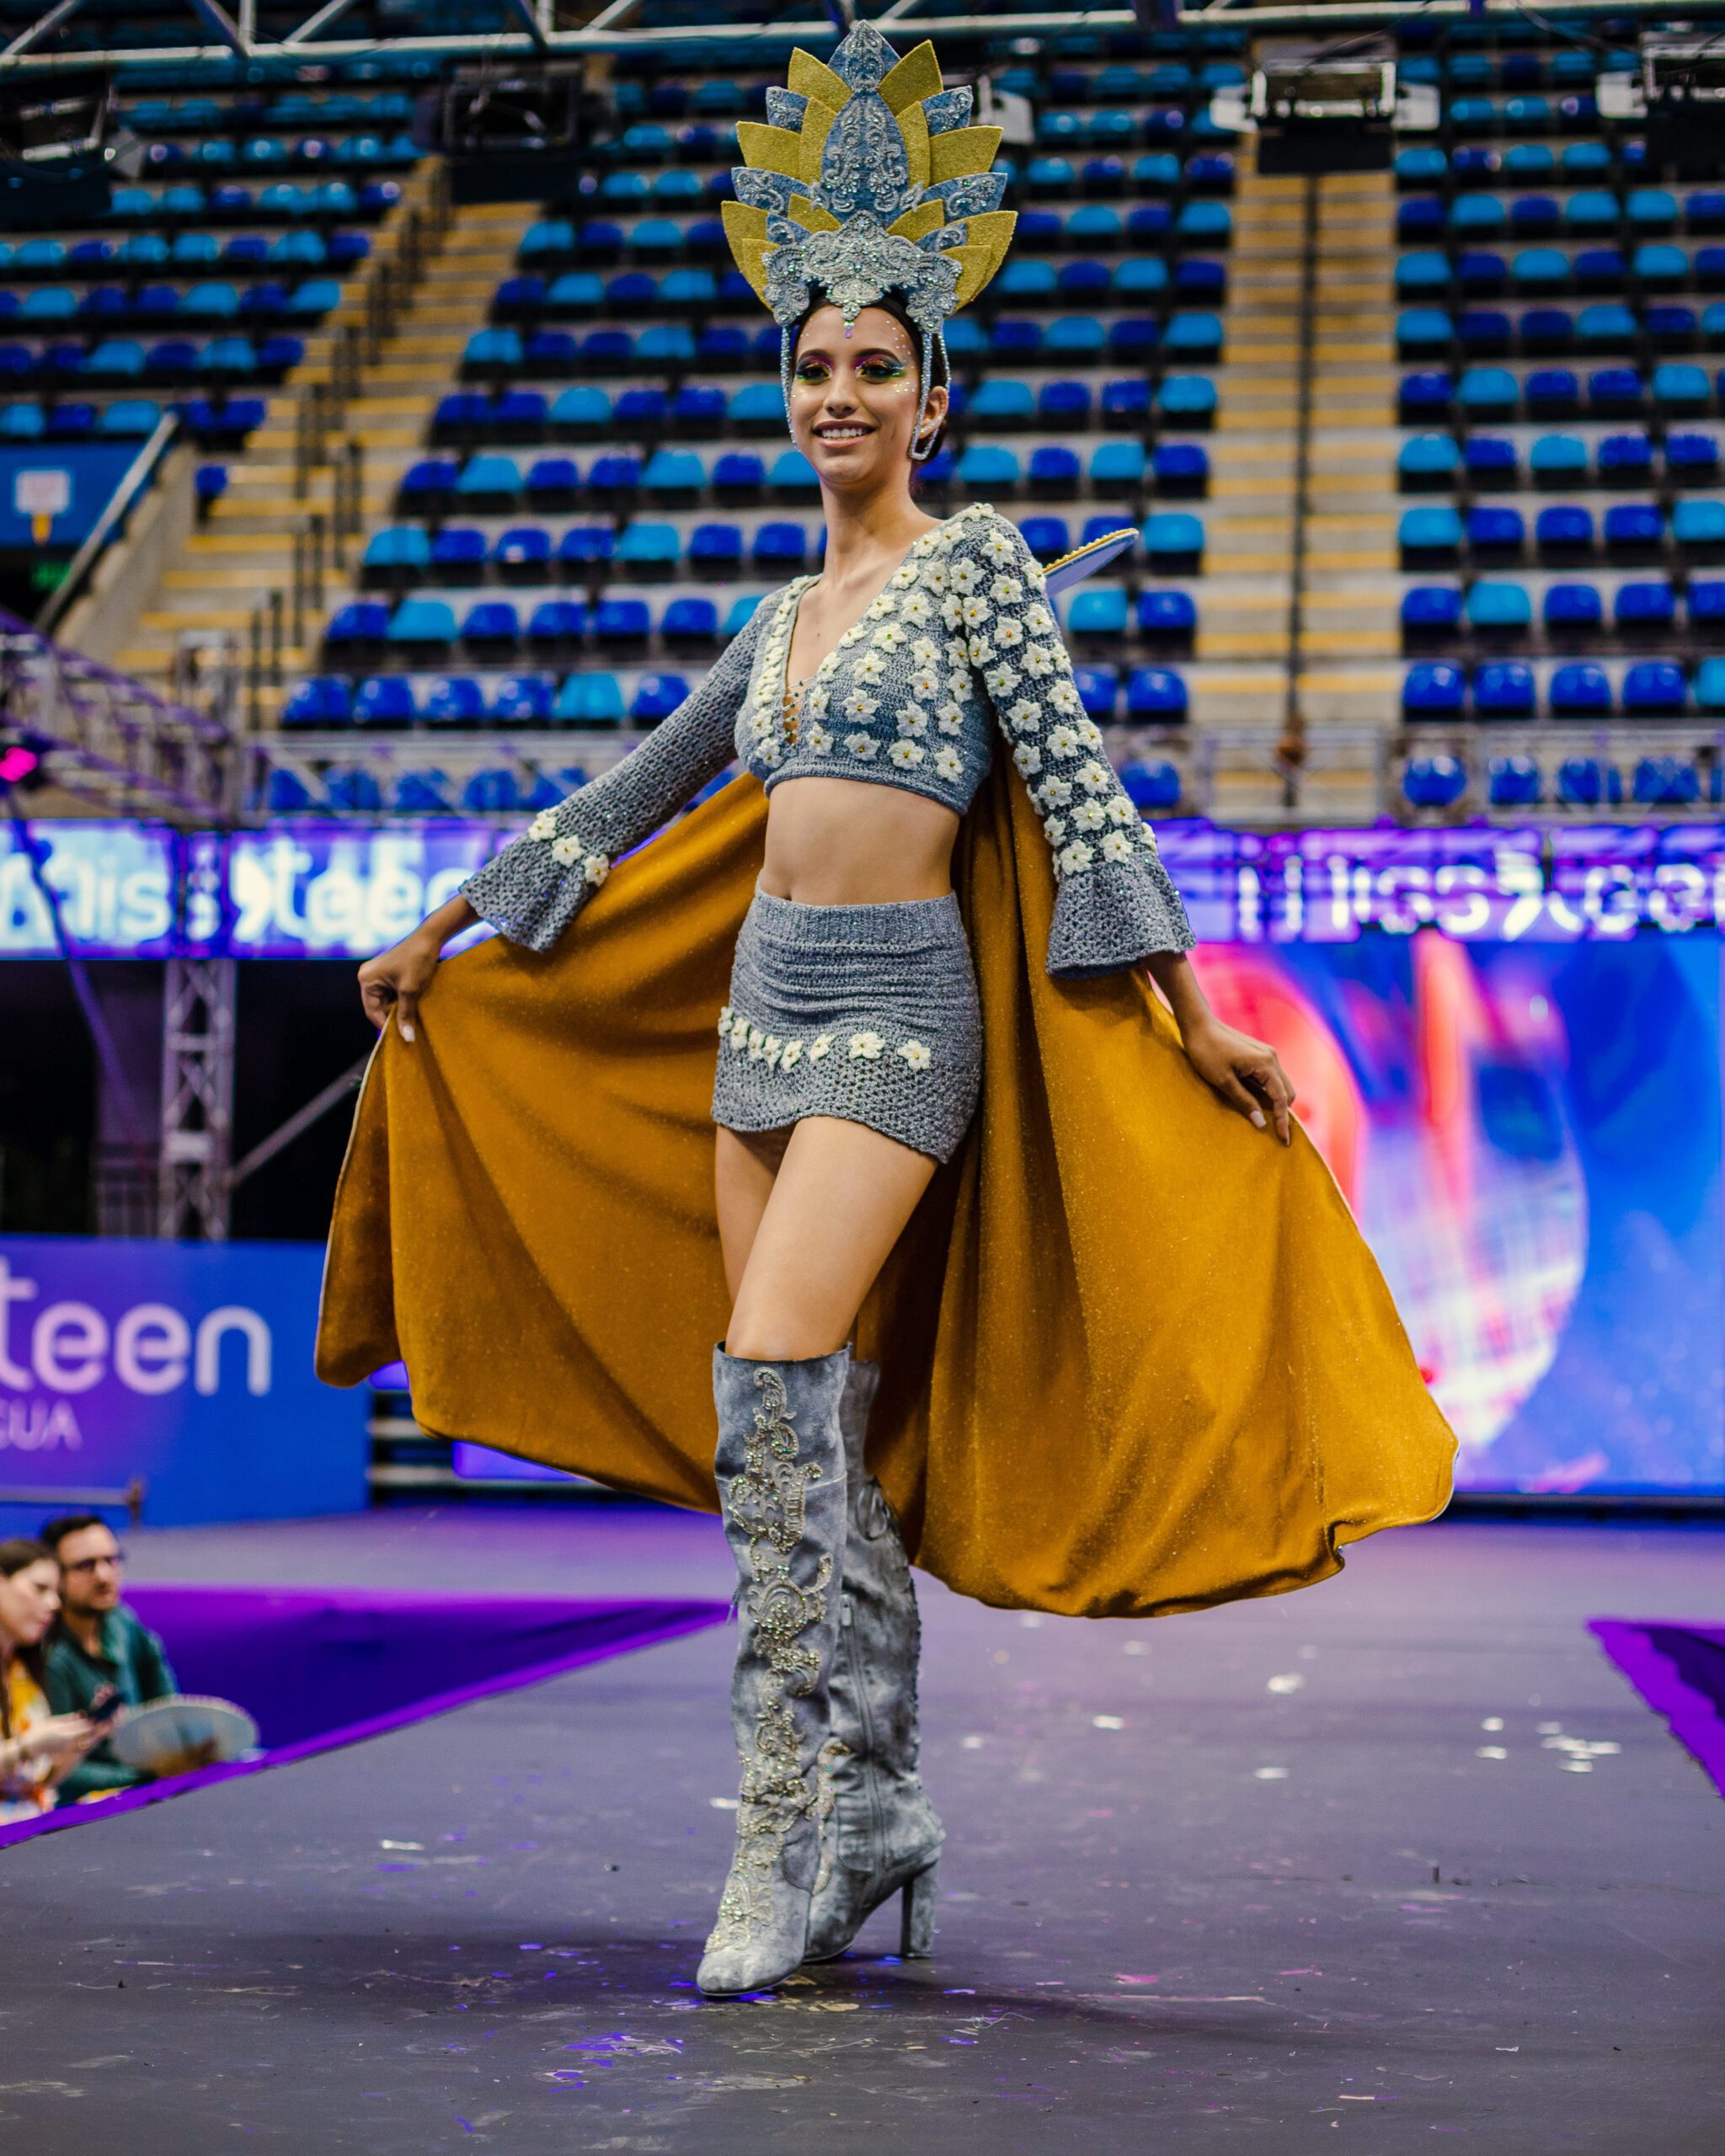 Pasarela de trajes de Fantasía Miss Teen Nicaragua 2022